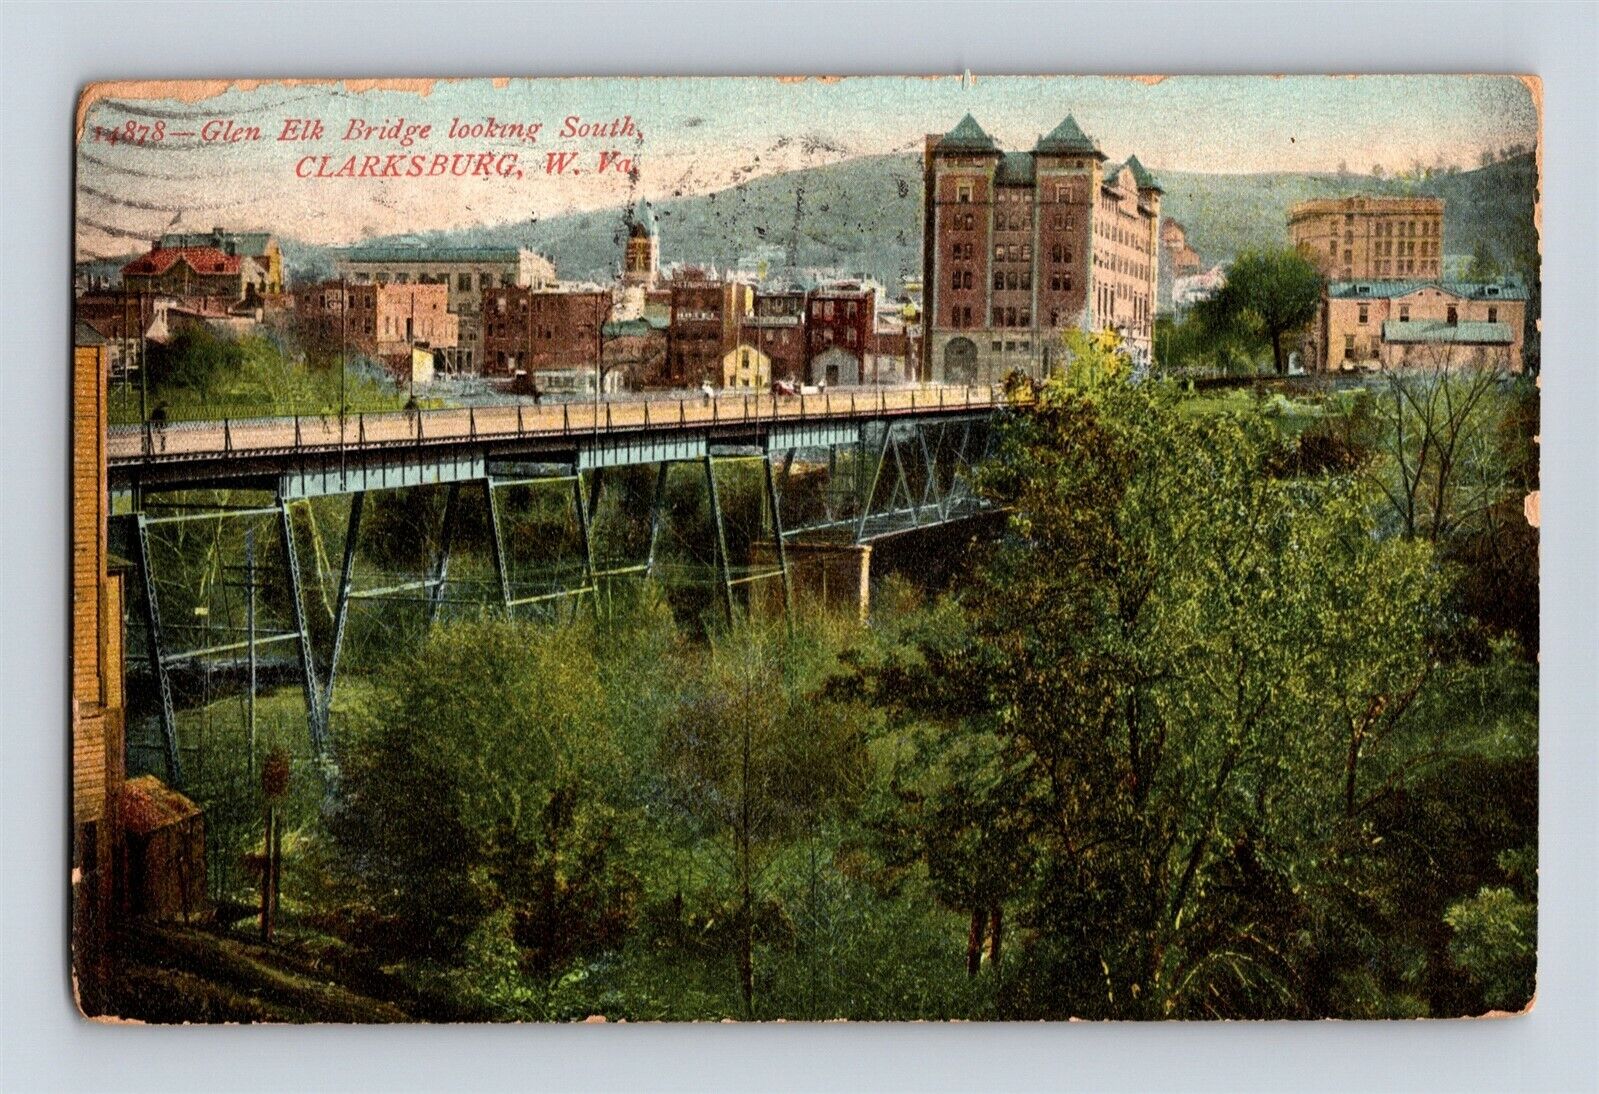 Postcard WV Clarksburg West Virginia Glen Elk Bridge Looking South c1907 AN19